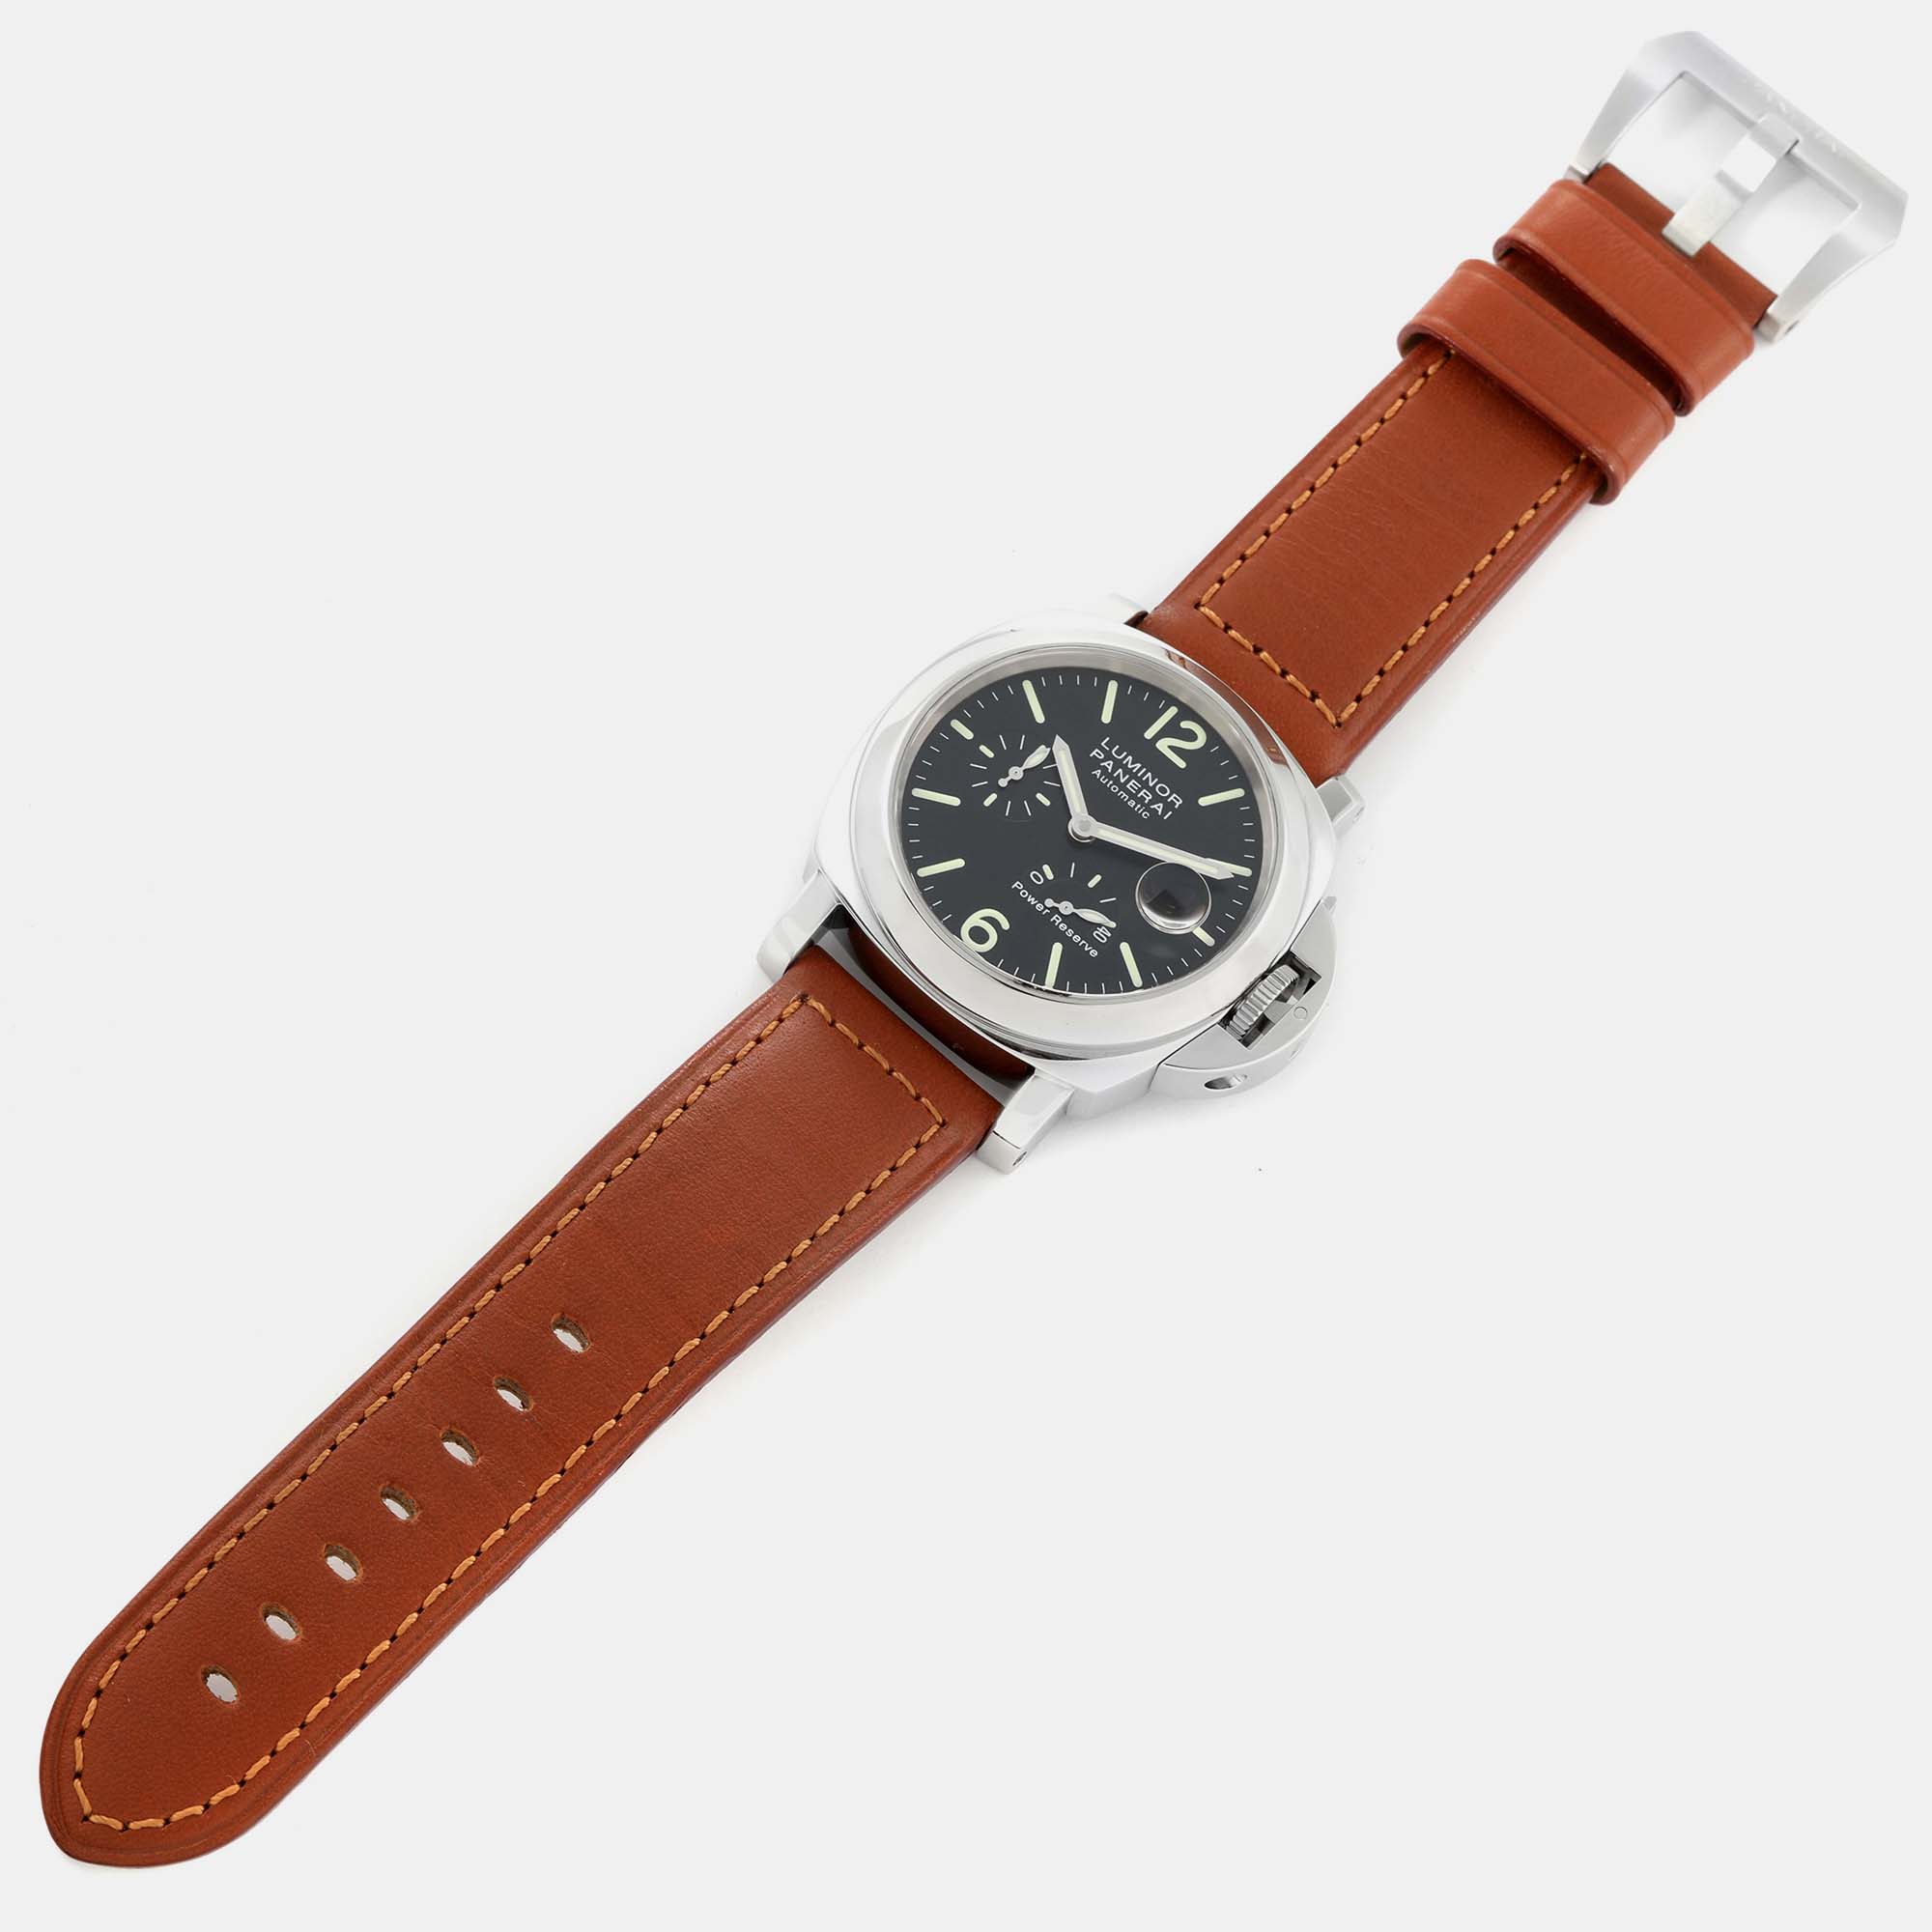 Panerai Black Stainless Steel Luminor PAM00090 Automatic Men's Wristwatch 44 Mm